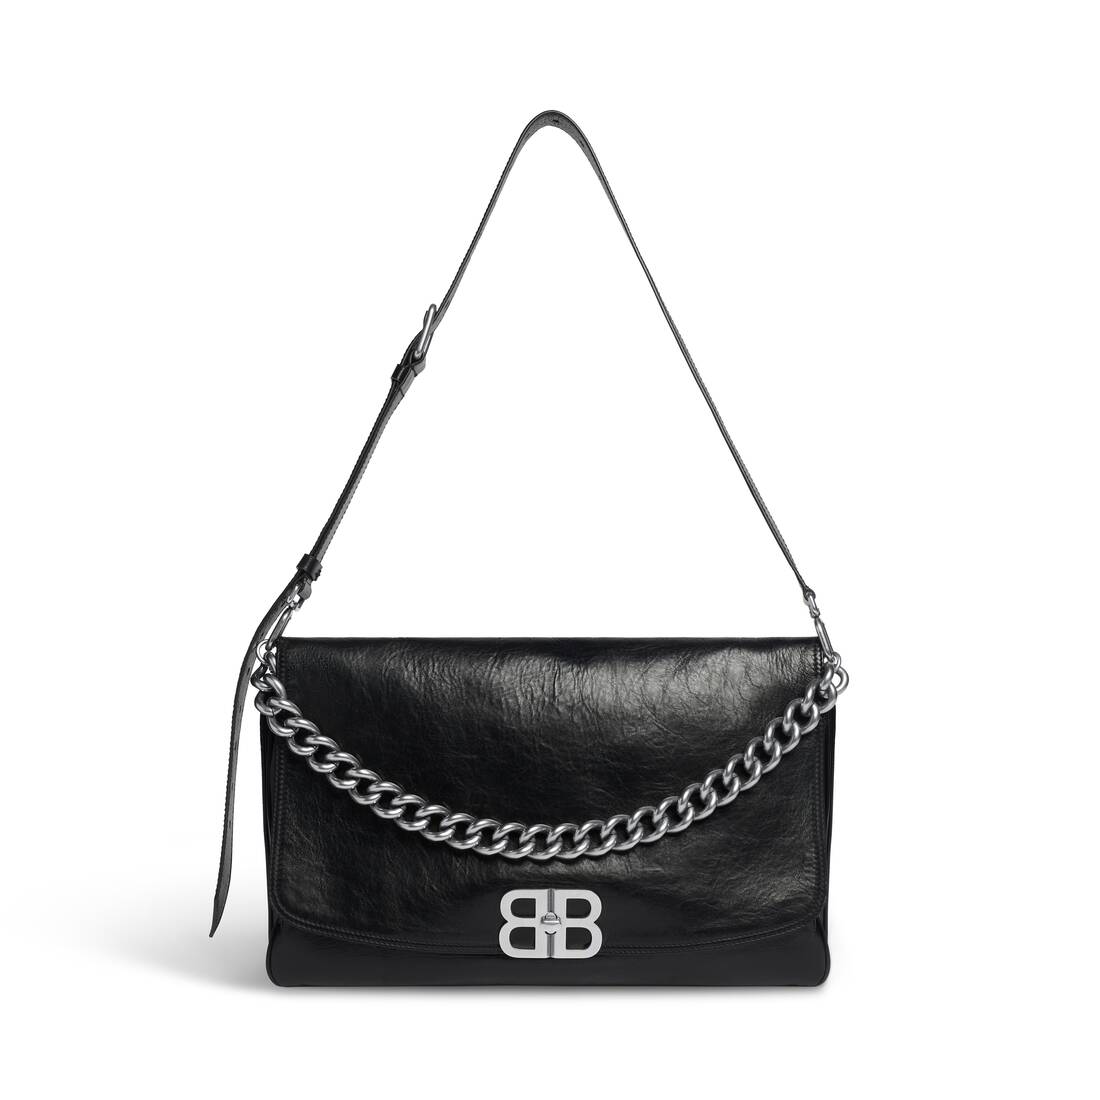 Balenciaga Bb Soft Flap Leather Shoulder Bag in Black